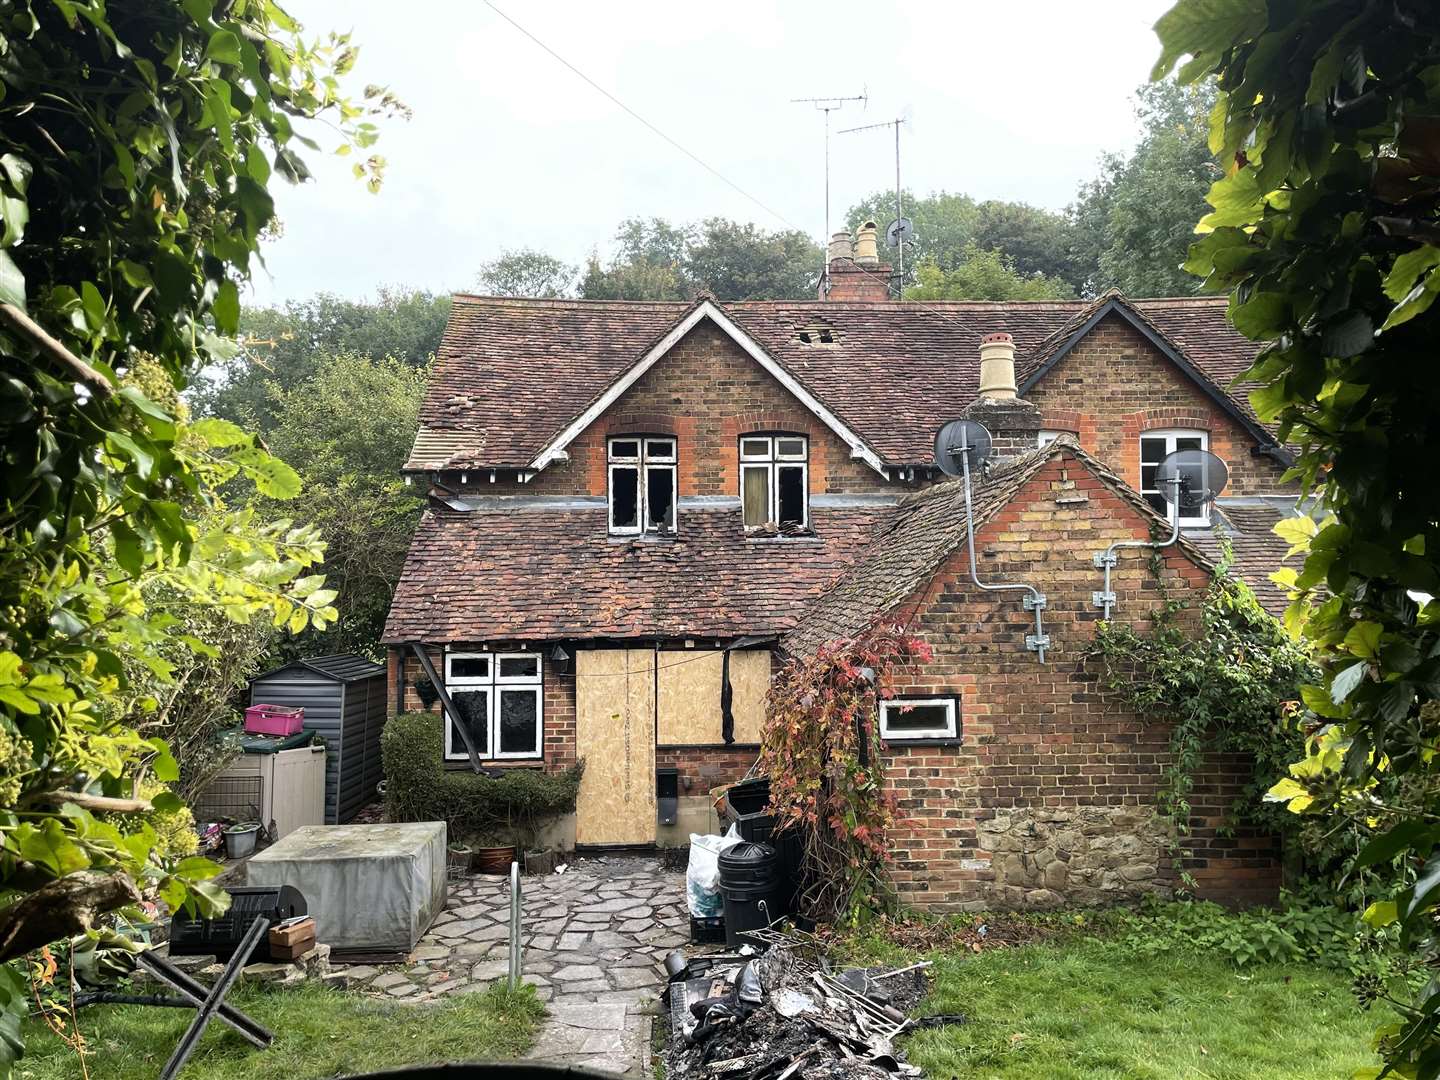 The damaged cottage in Ivy Mill Lane, Tovil